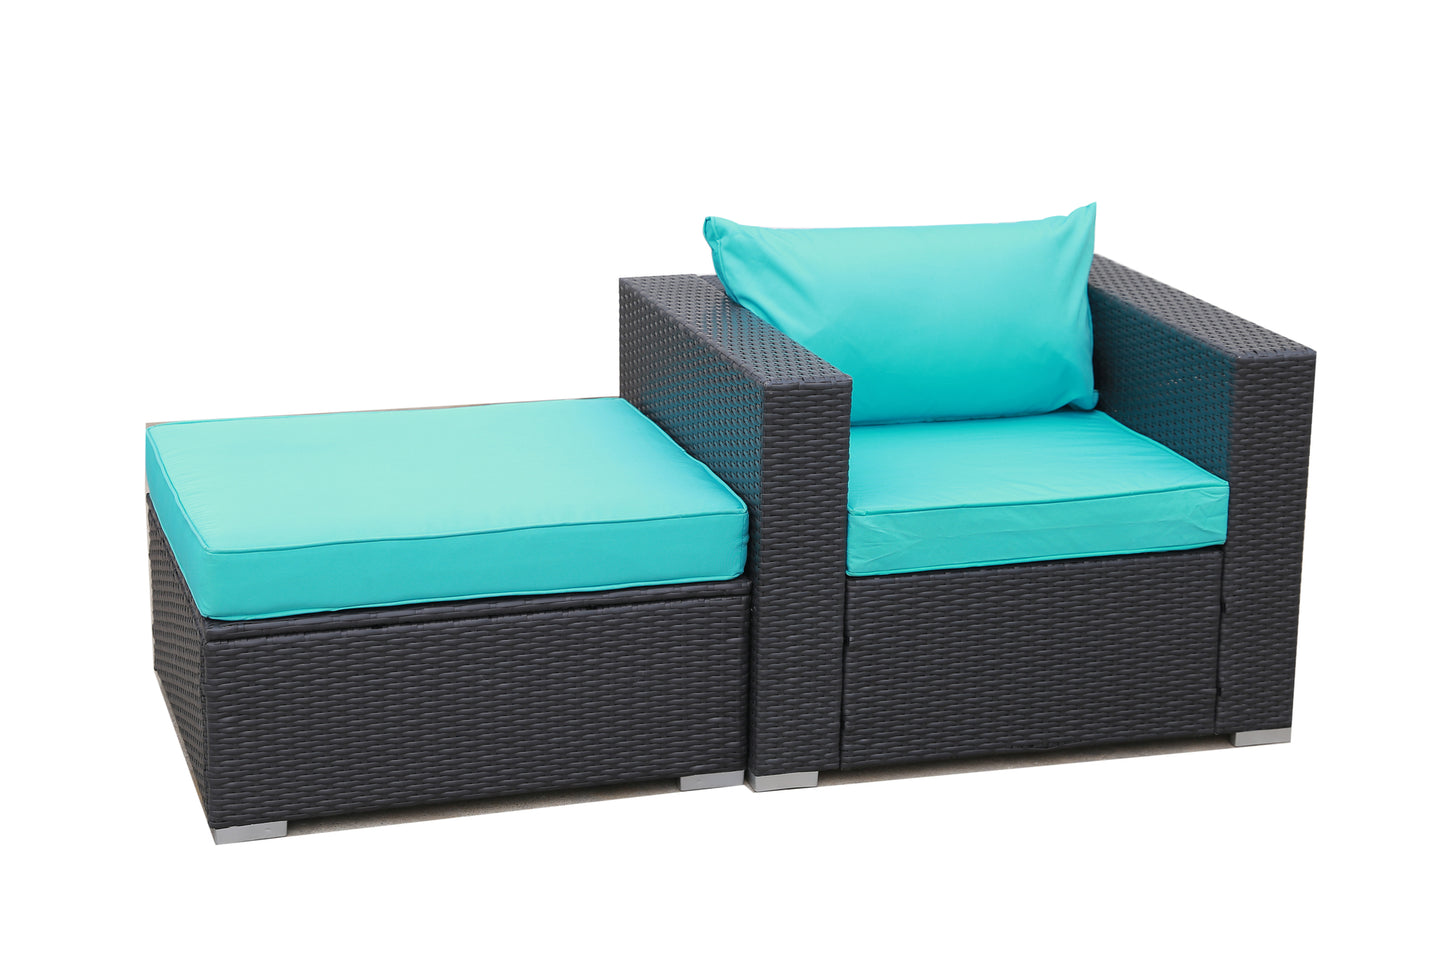 2PC Patio Furniture Set w/Ottoman